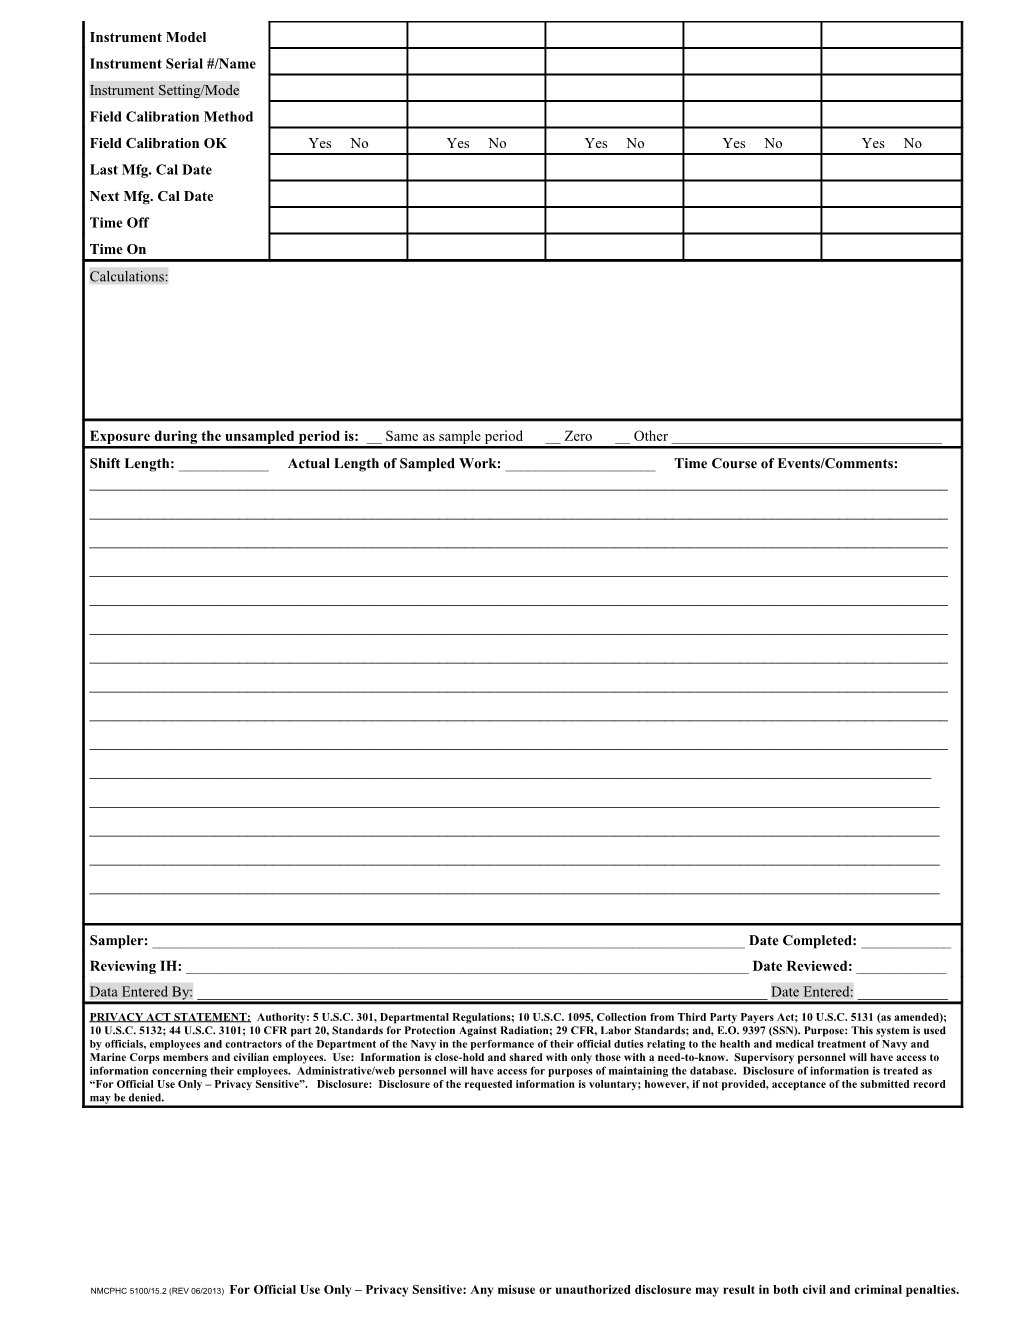 Industrial Hygiene Direct Reading Sample Survey Form